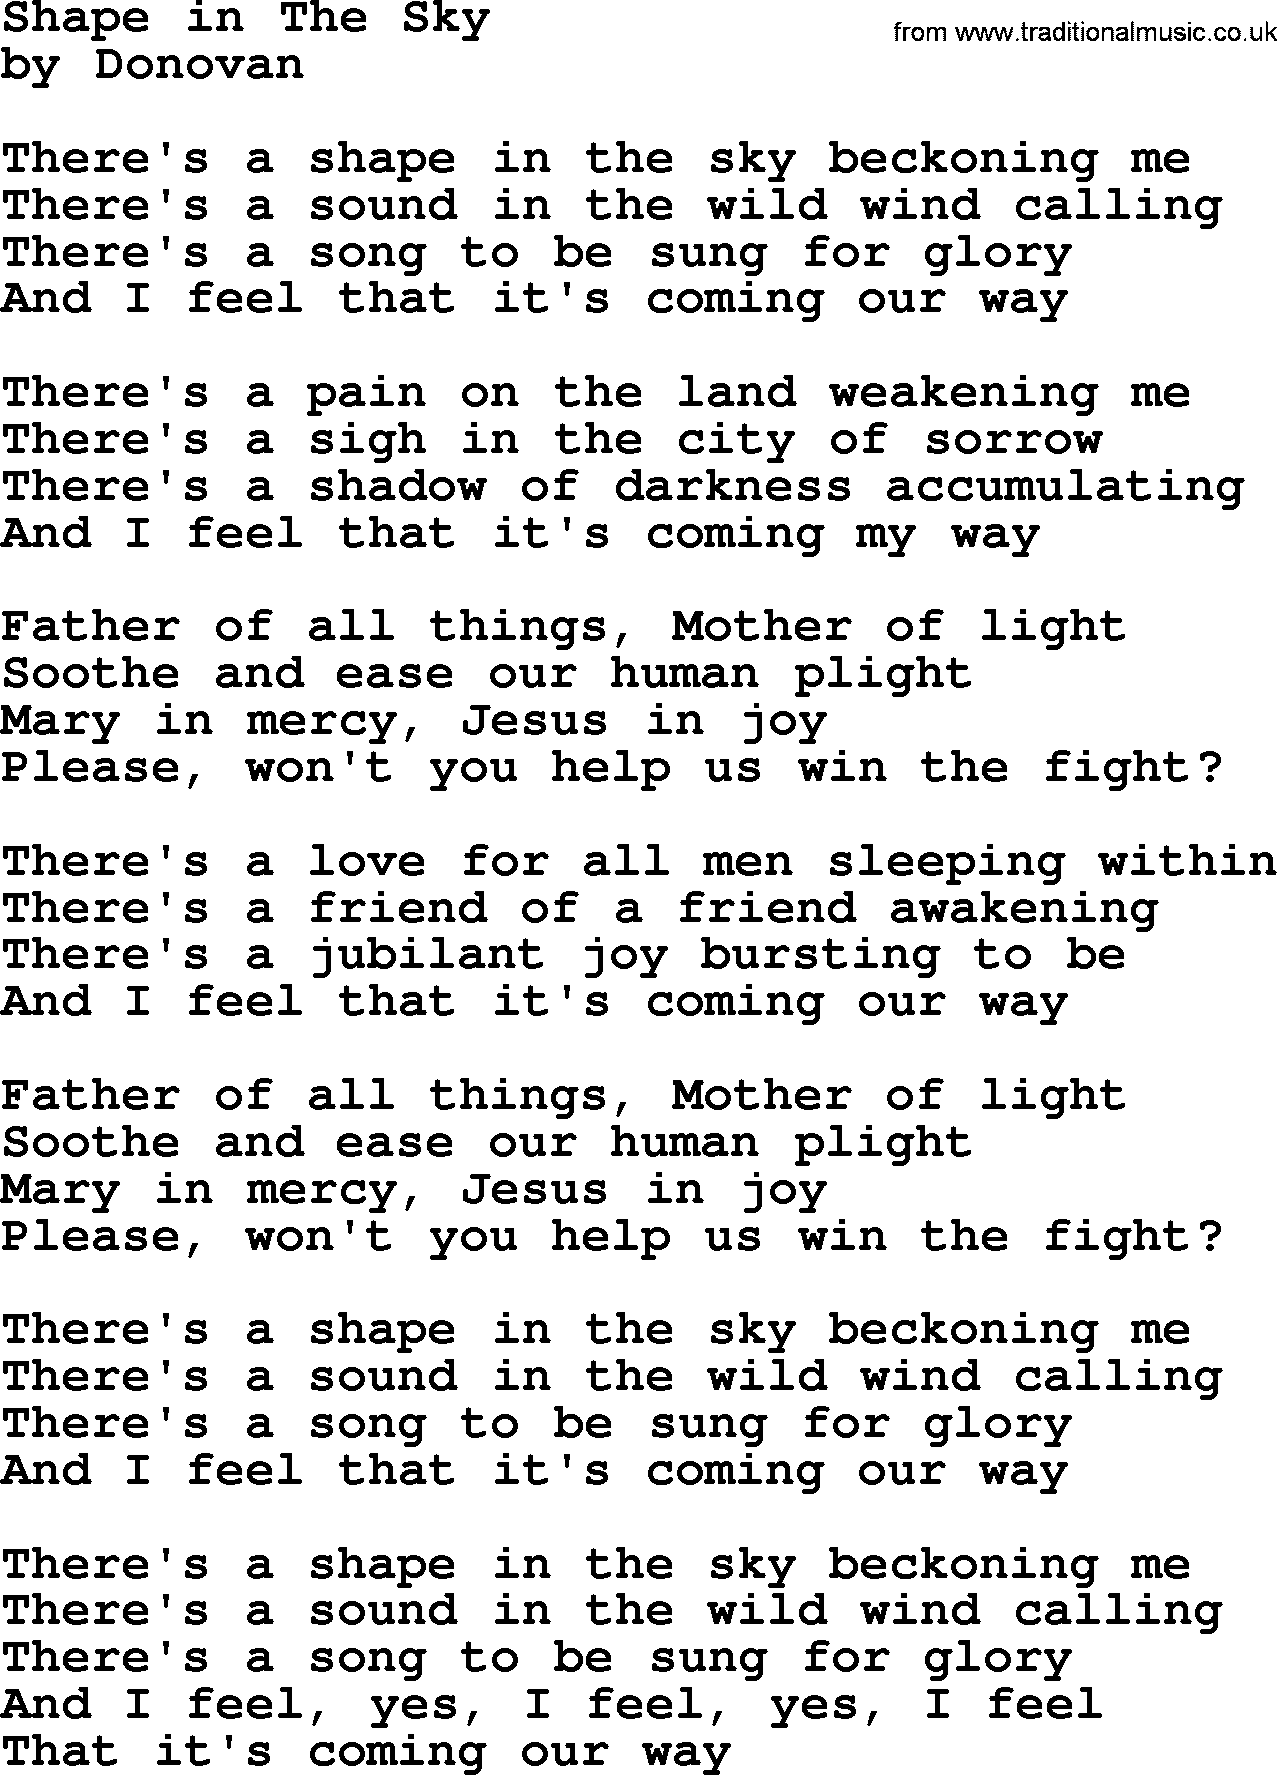 Donovan Leitch song: Shape In The Sky lyrics